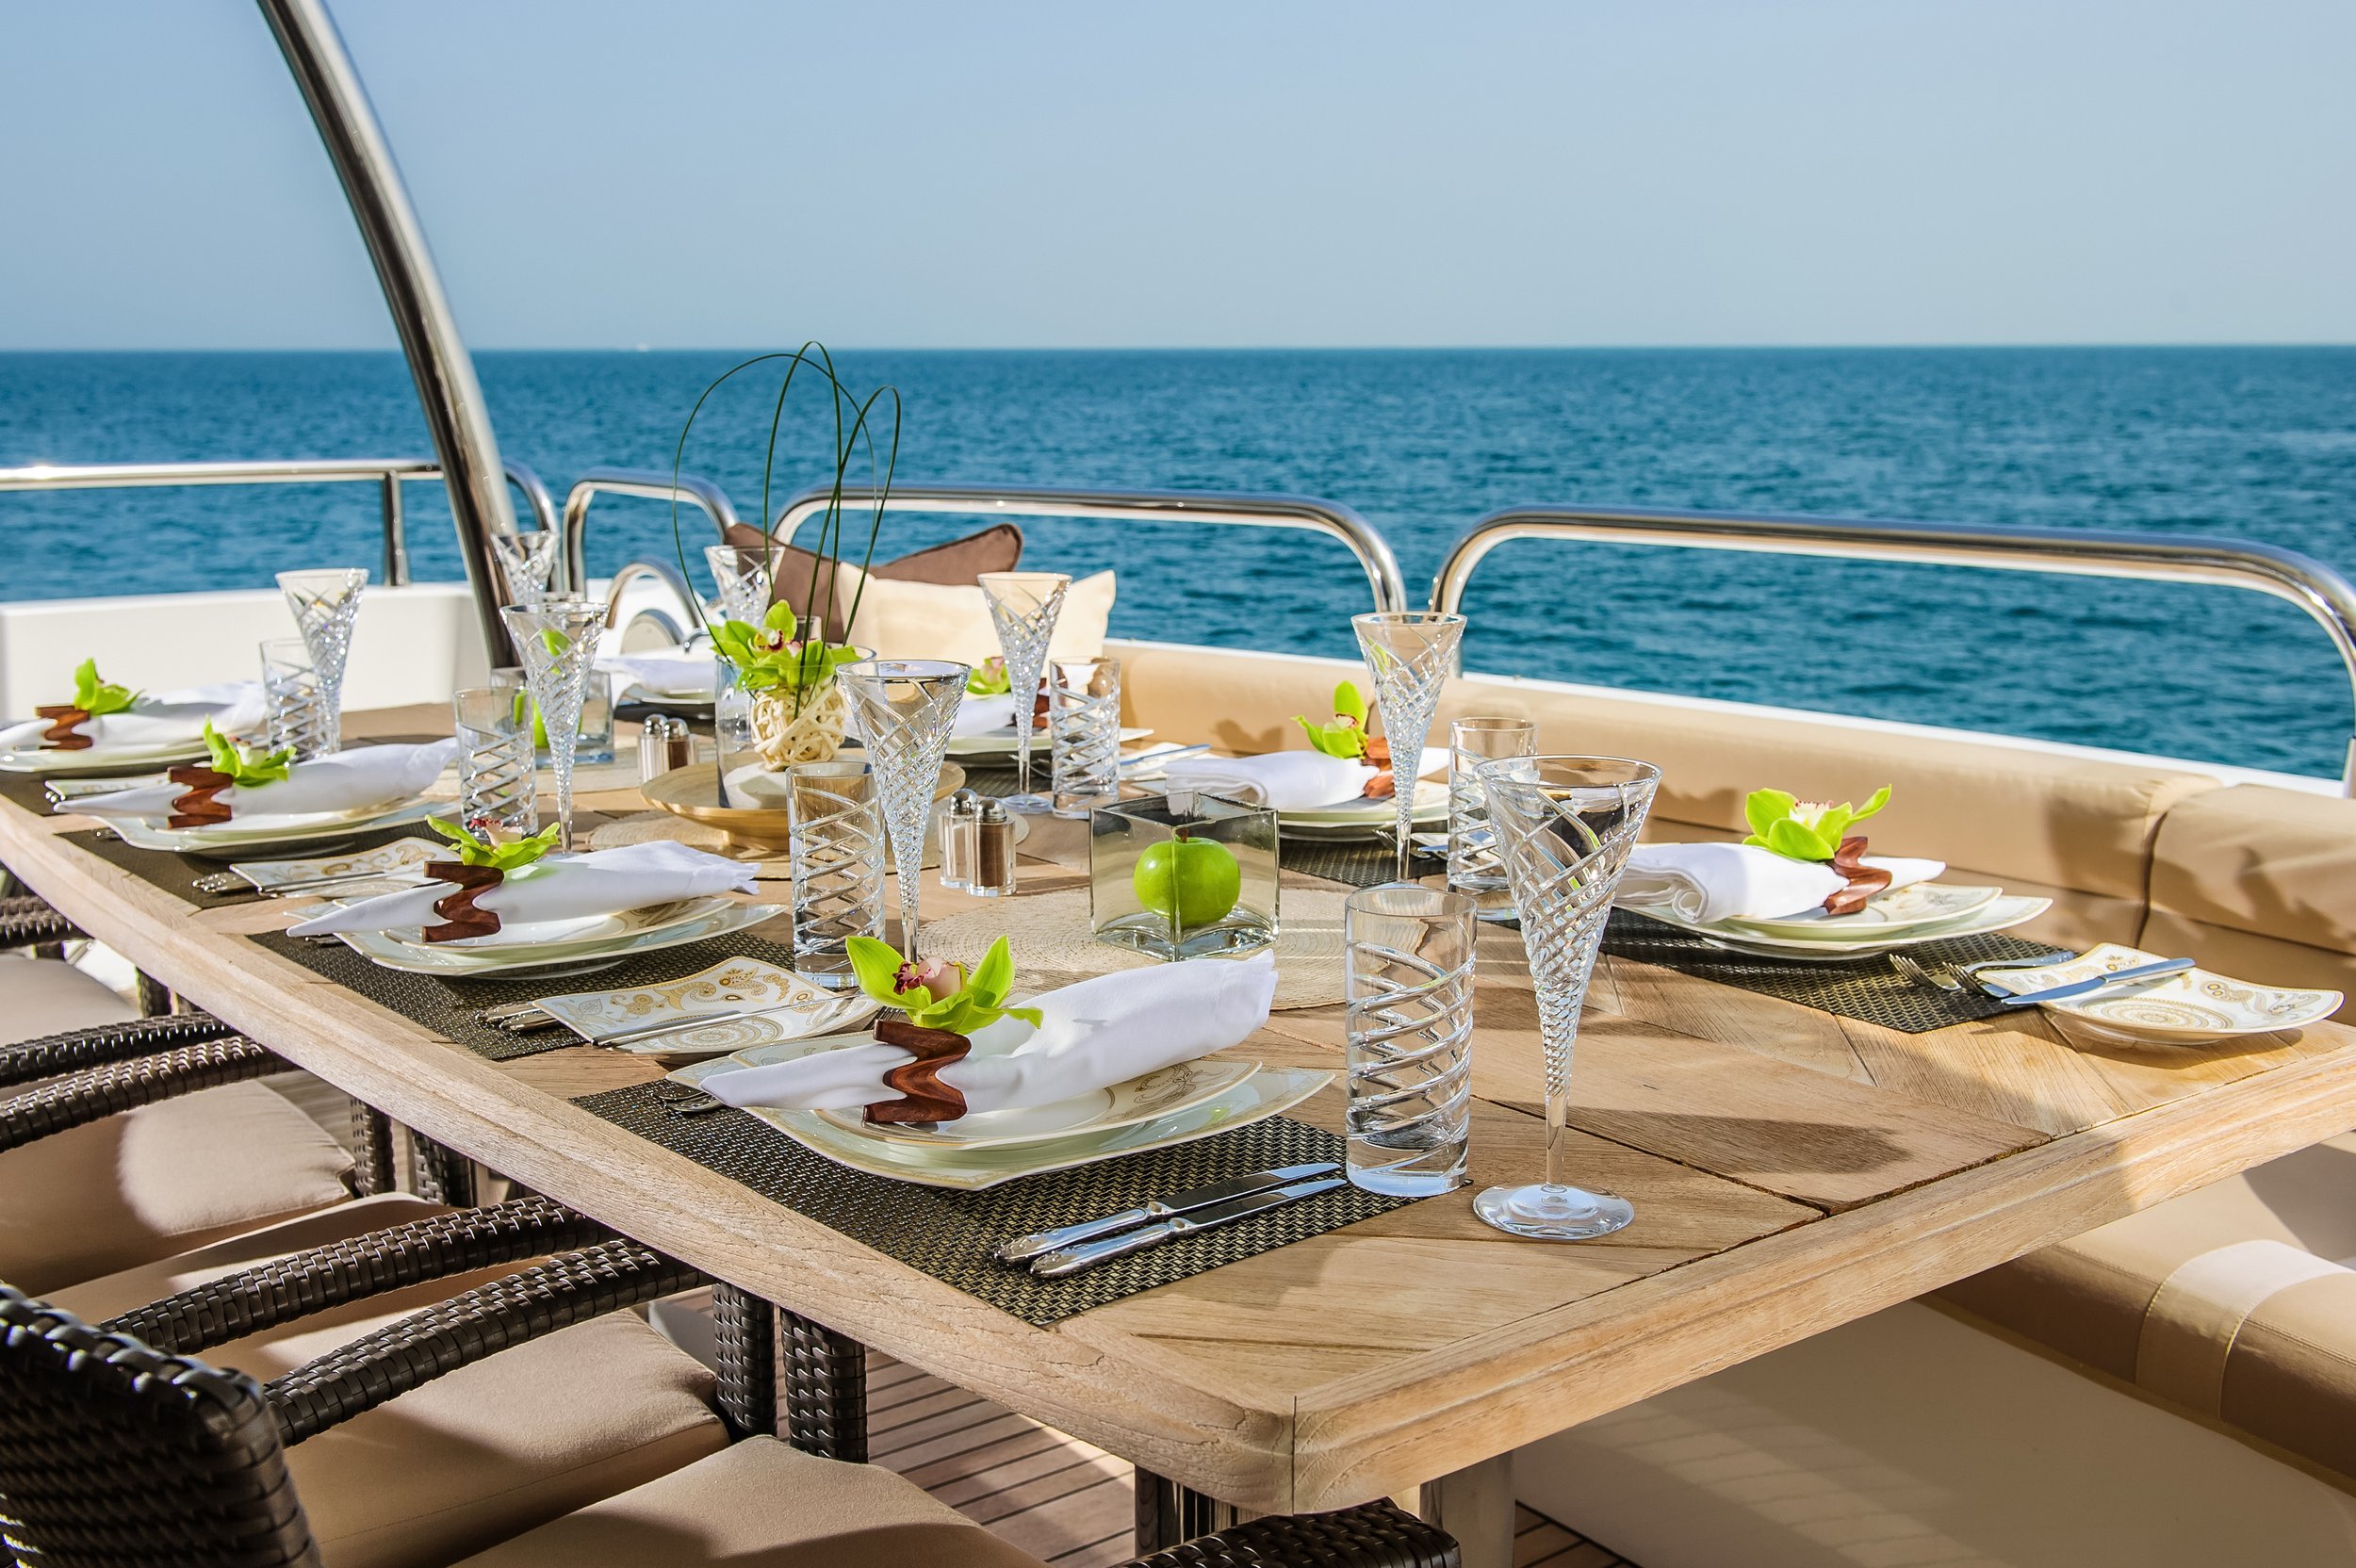 Stylish Yacht Lunch Table Setting.jpg